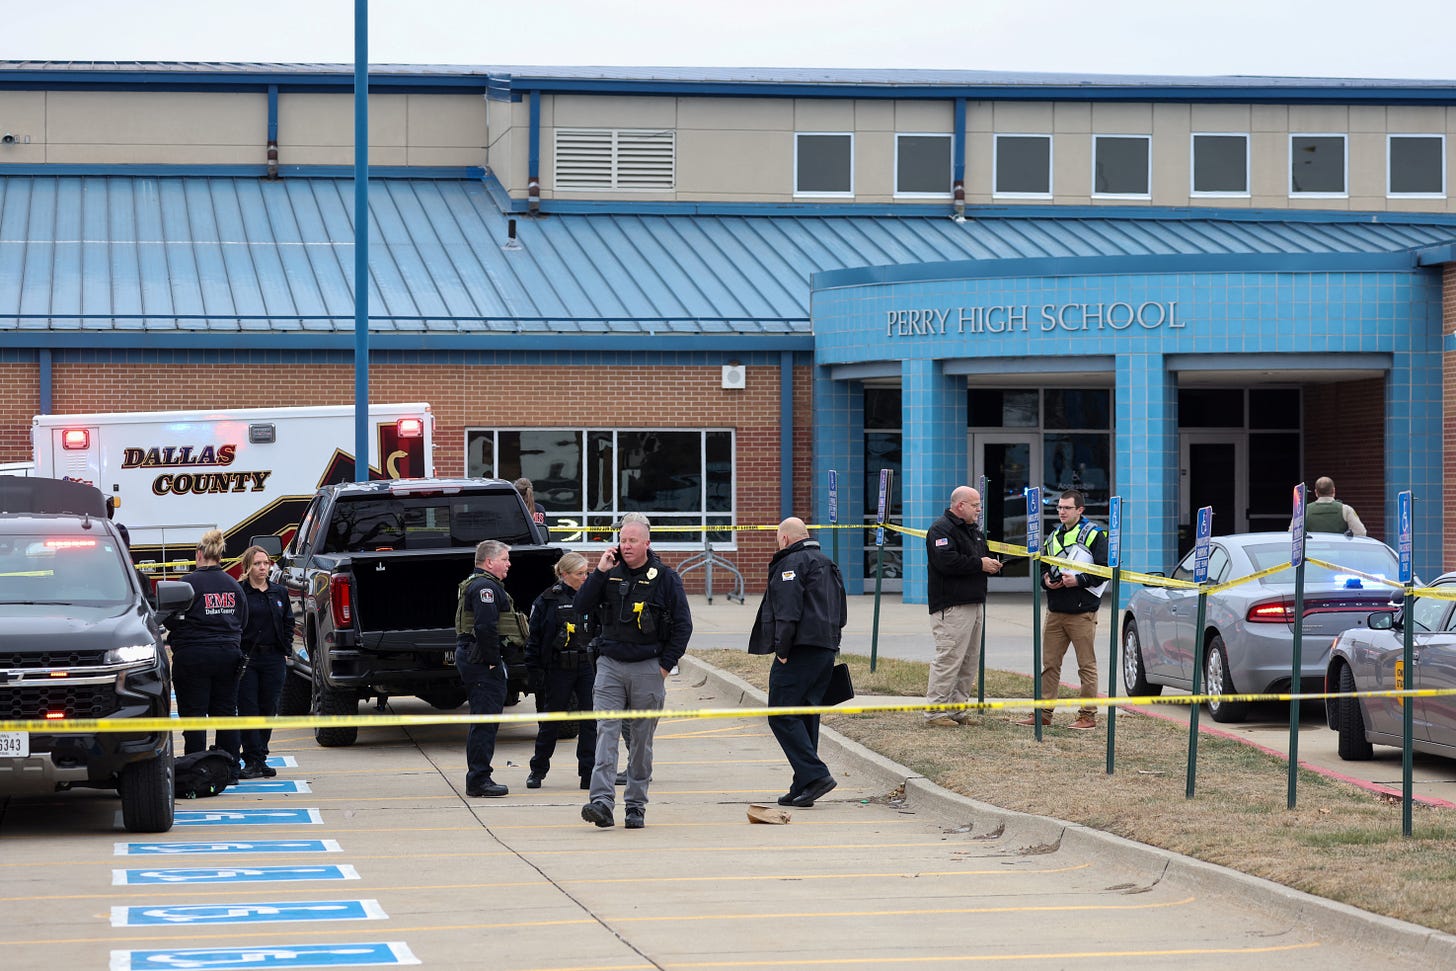 Sixth-grade student killed in Iowa school shooting, gunman dead | Reuters